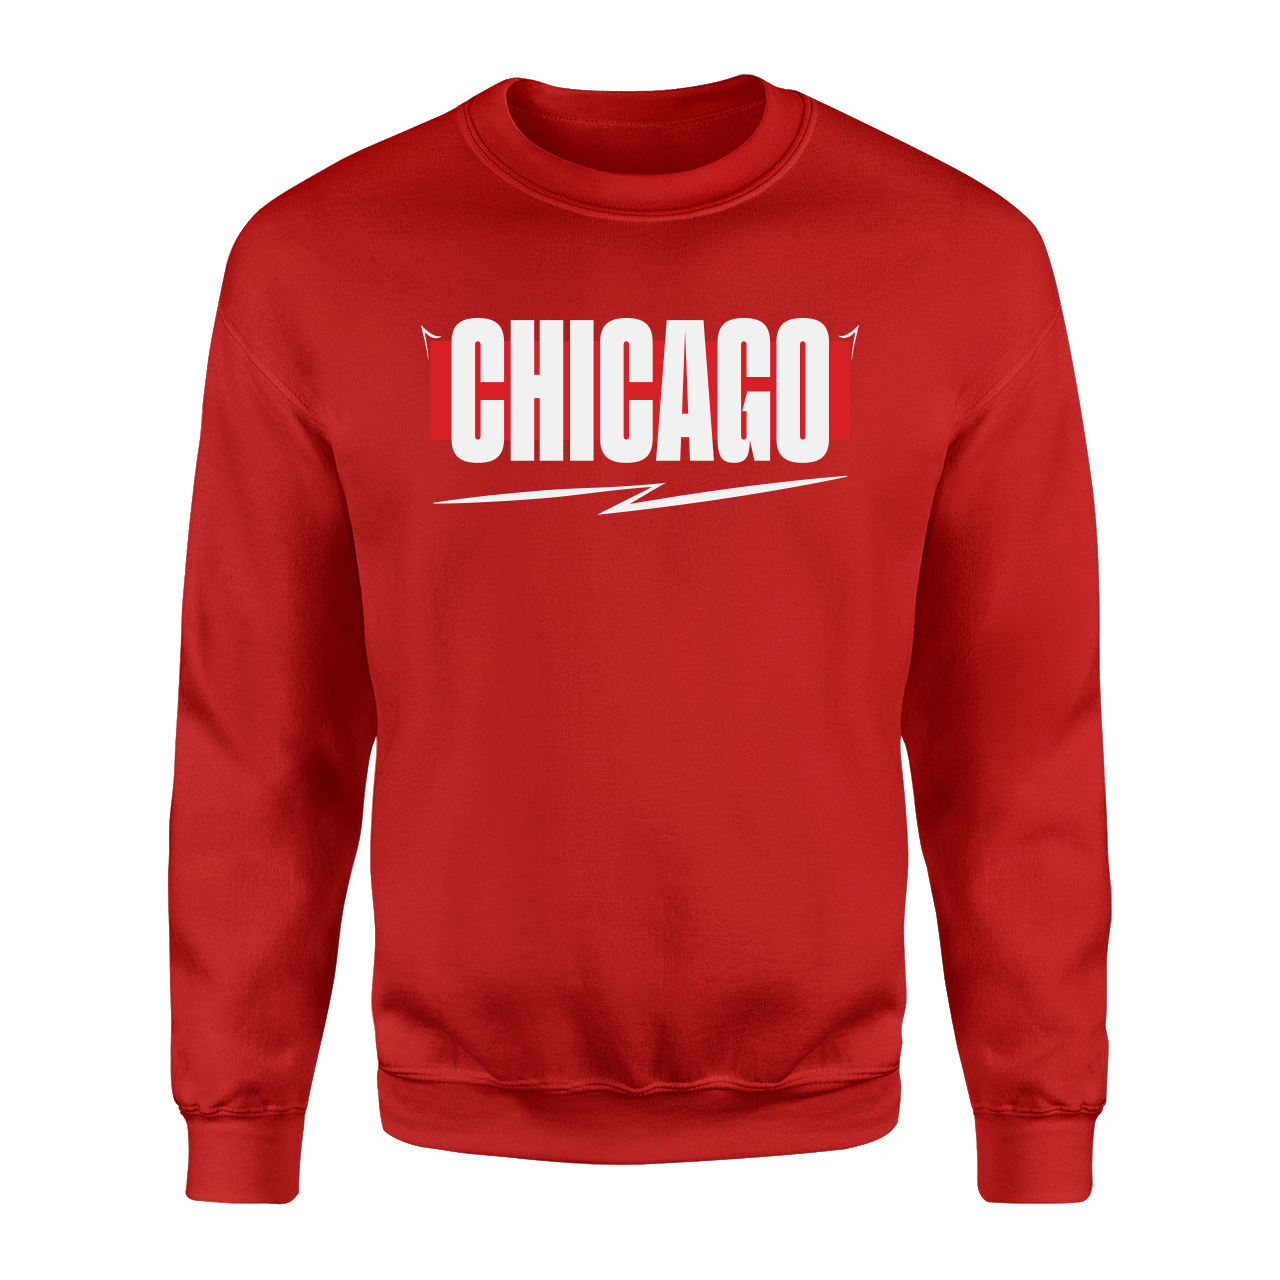 Chicago Kırmızı Sweatshirt